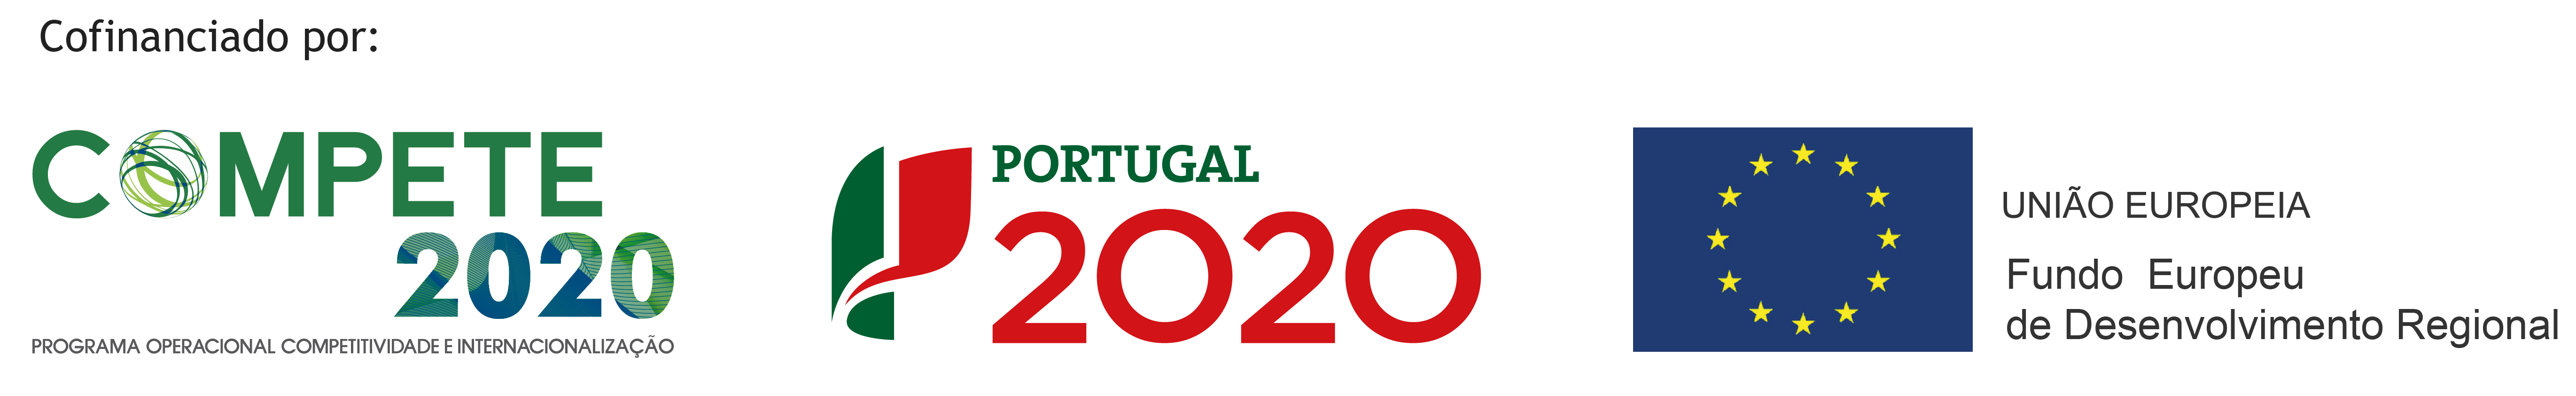 logotipo COMPETE/ PORTUGAL 2020 /EU – Fundo Social Europeu